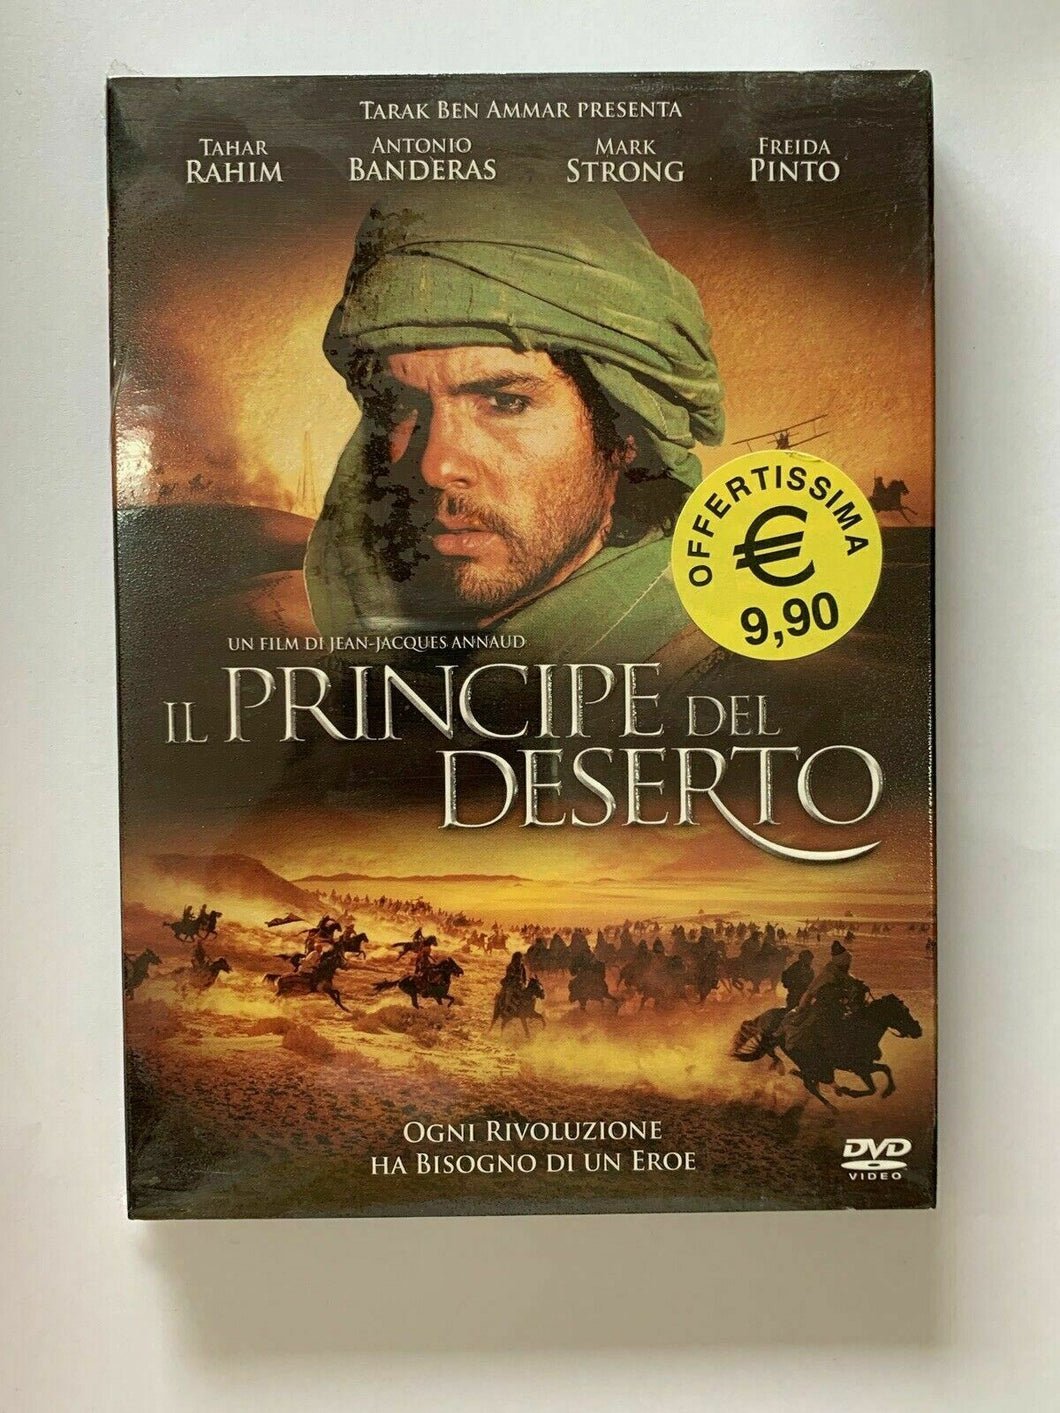 Il principe del deserto (2011) DVD Rent sigillato Antonio Banderas Annaud